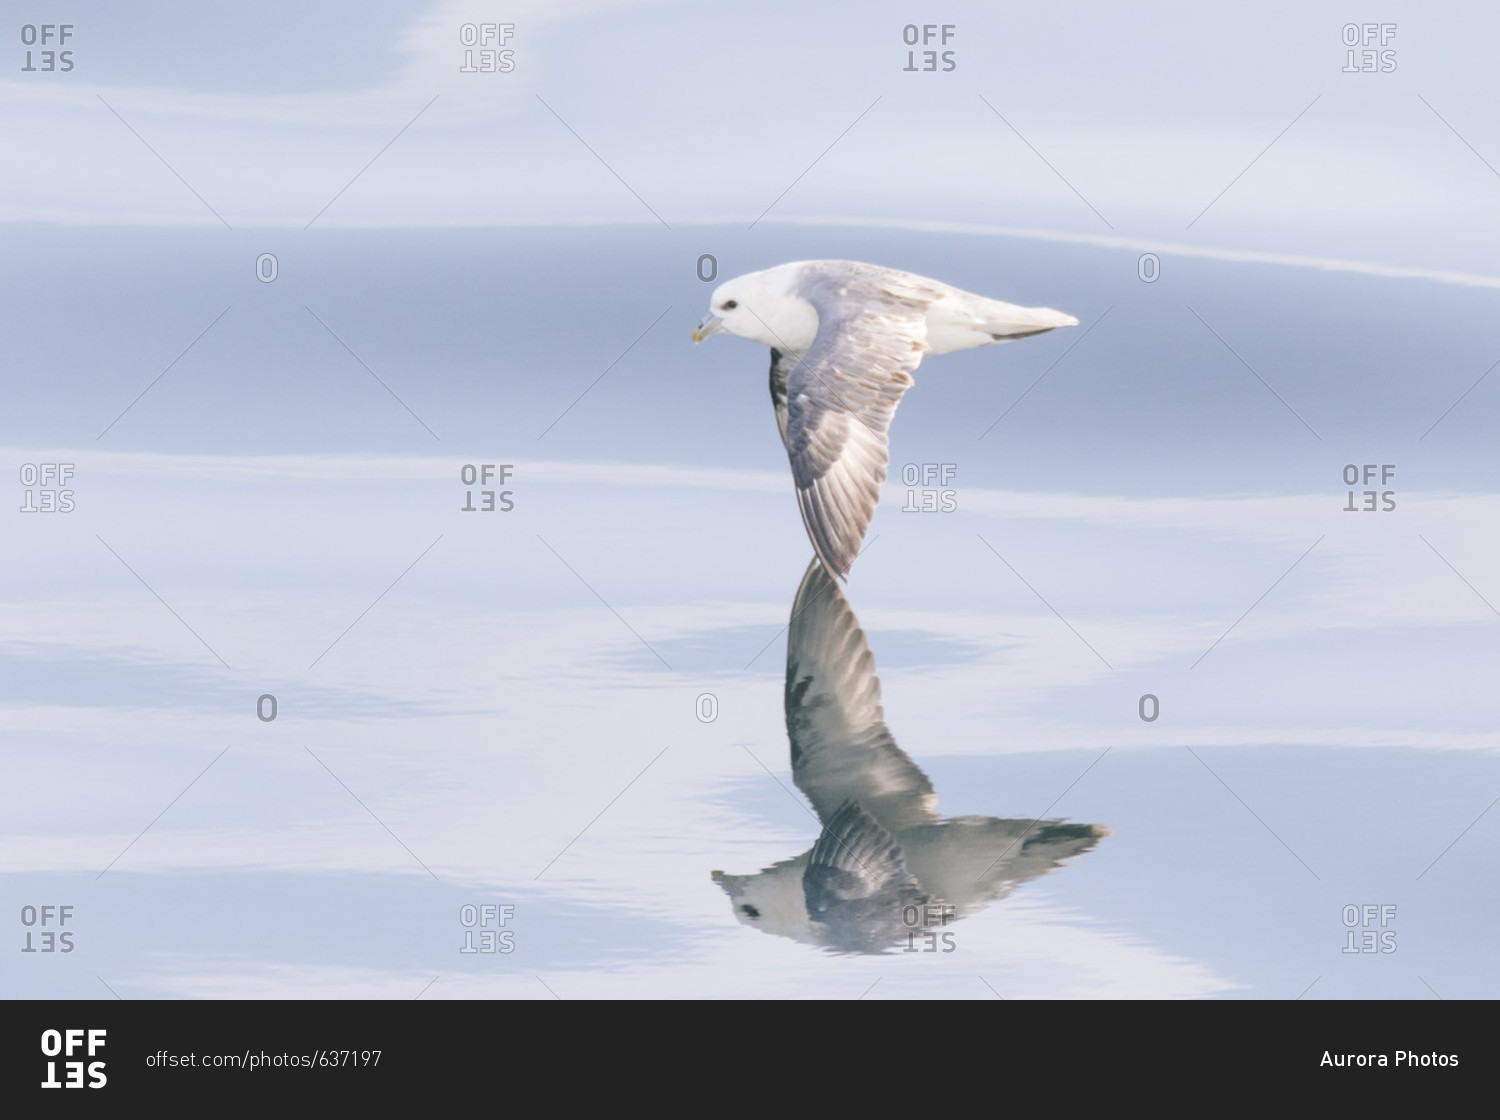 Single fulmar bird flying above water surface, Iceland